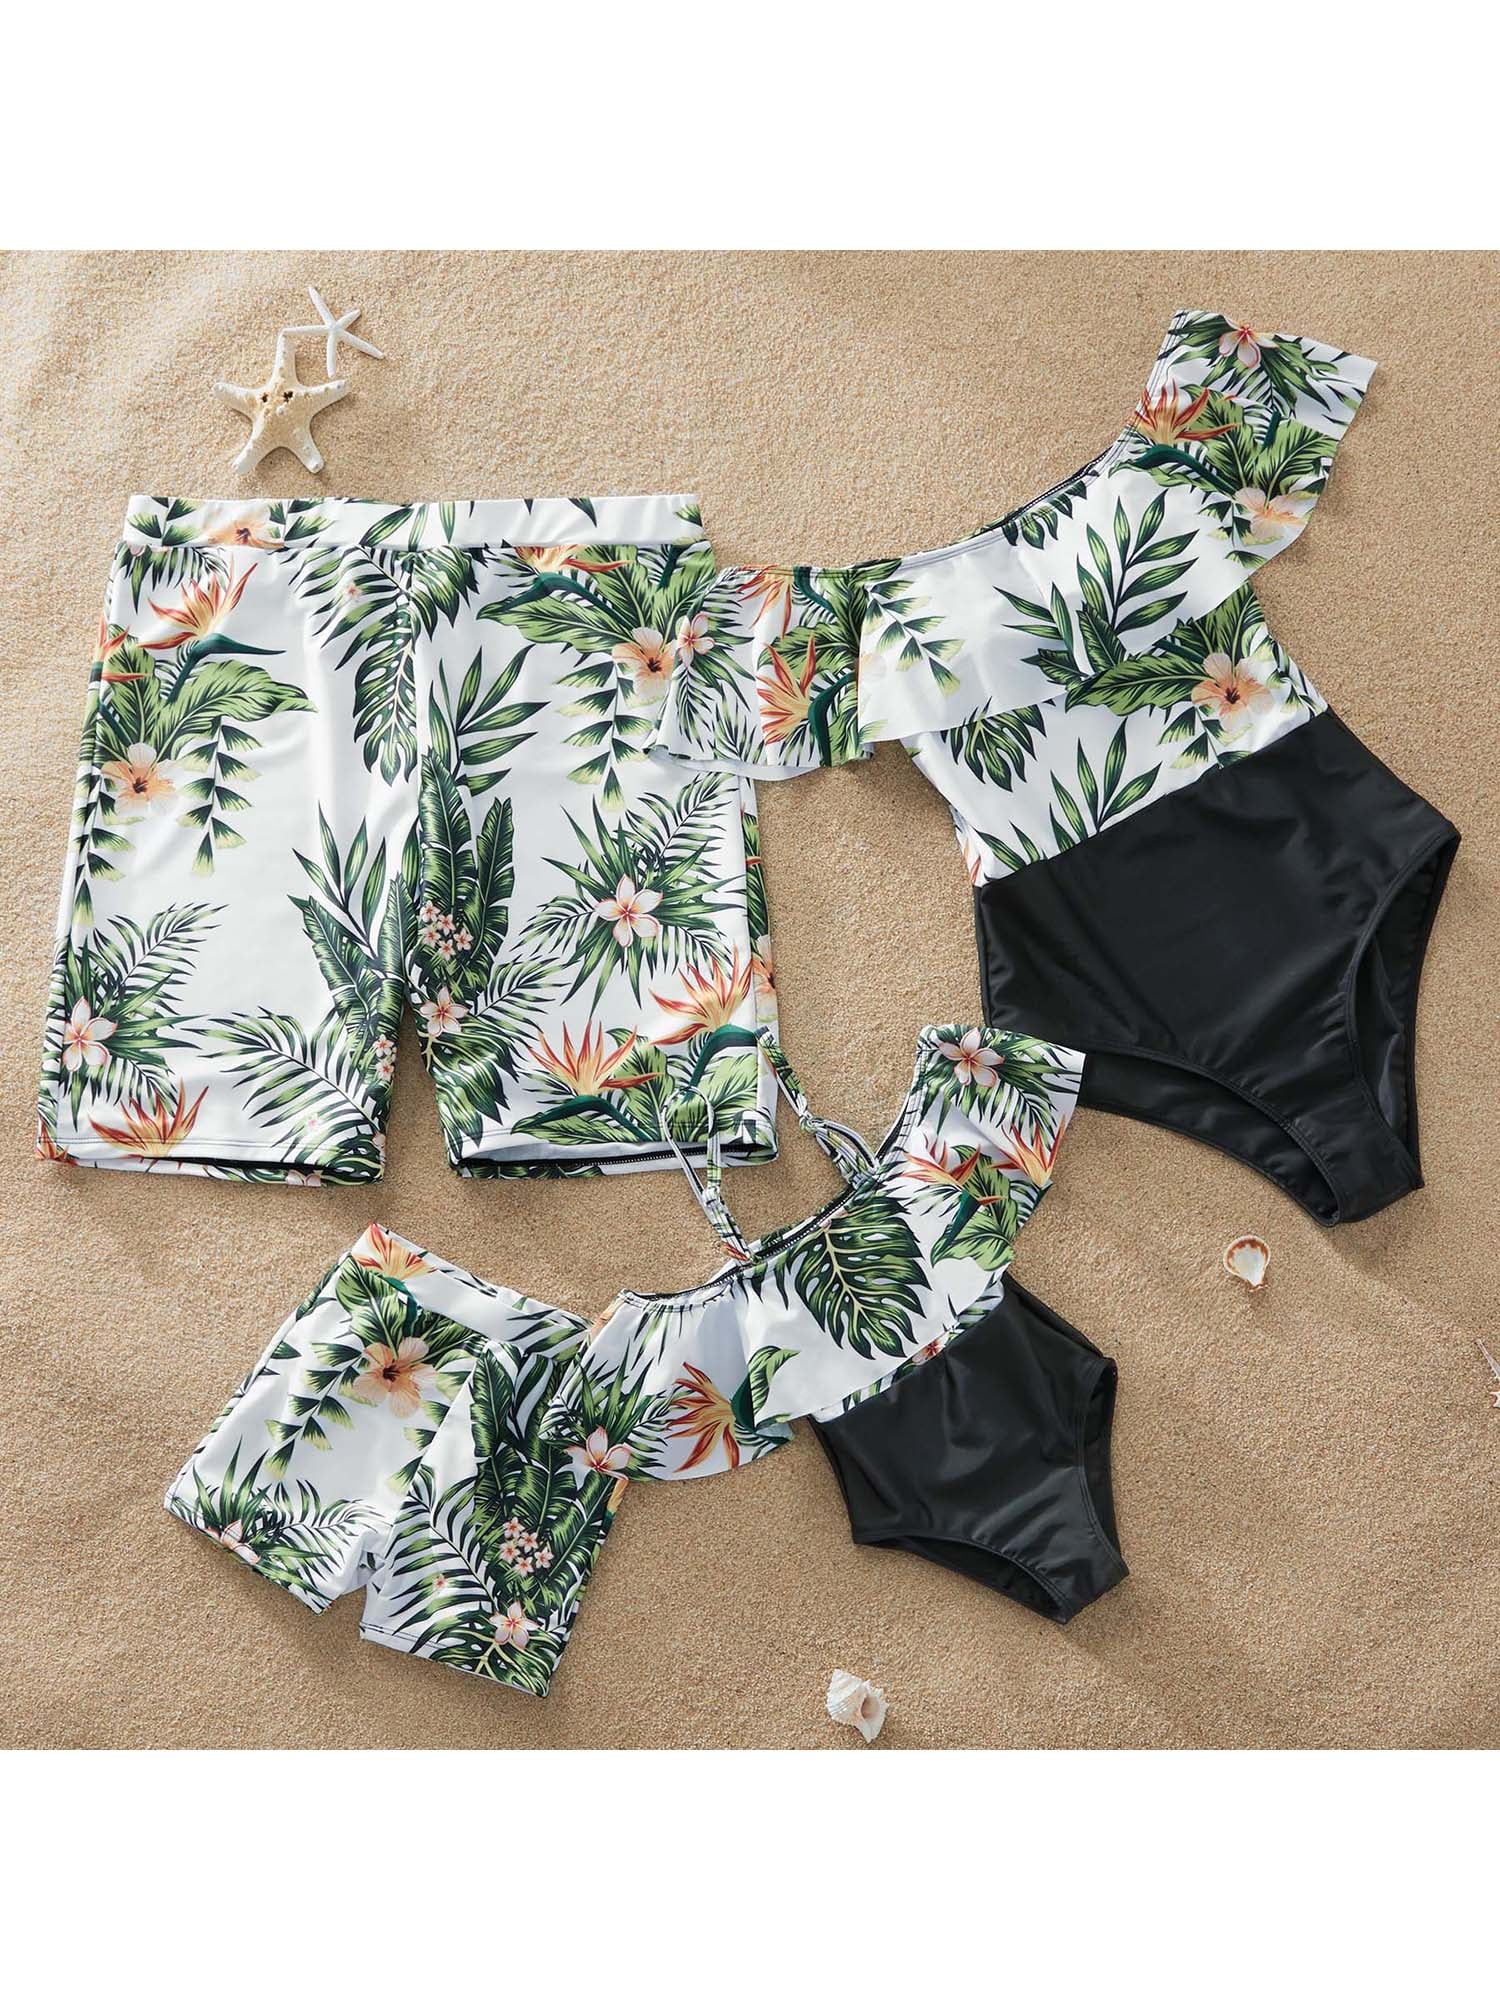 PatPat Plant Family Matching Swimsuit Beach Swimwear,One Piece,Sizes Baby-Kids-Adult | Walmart (US)